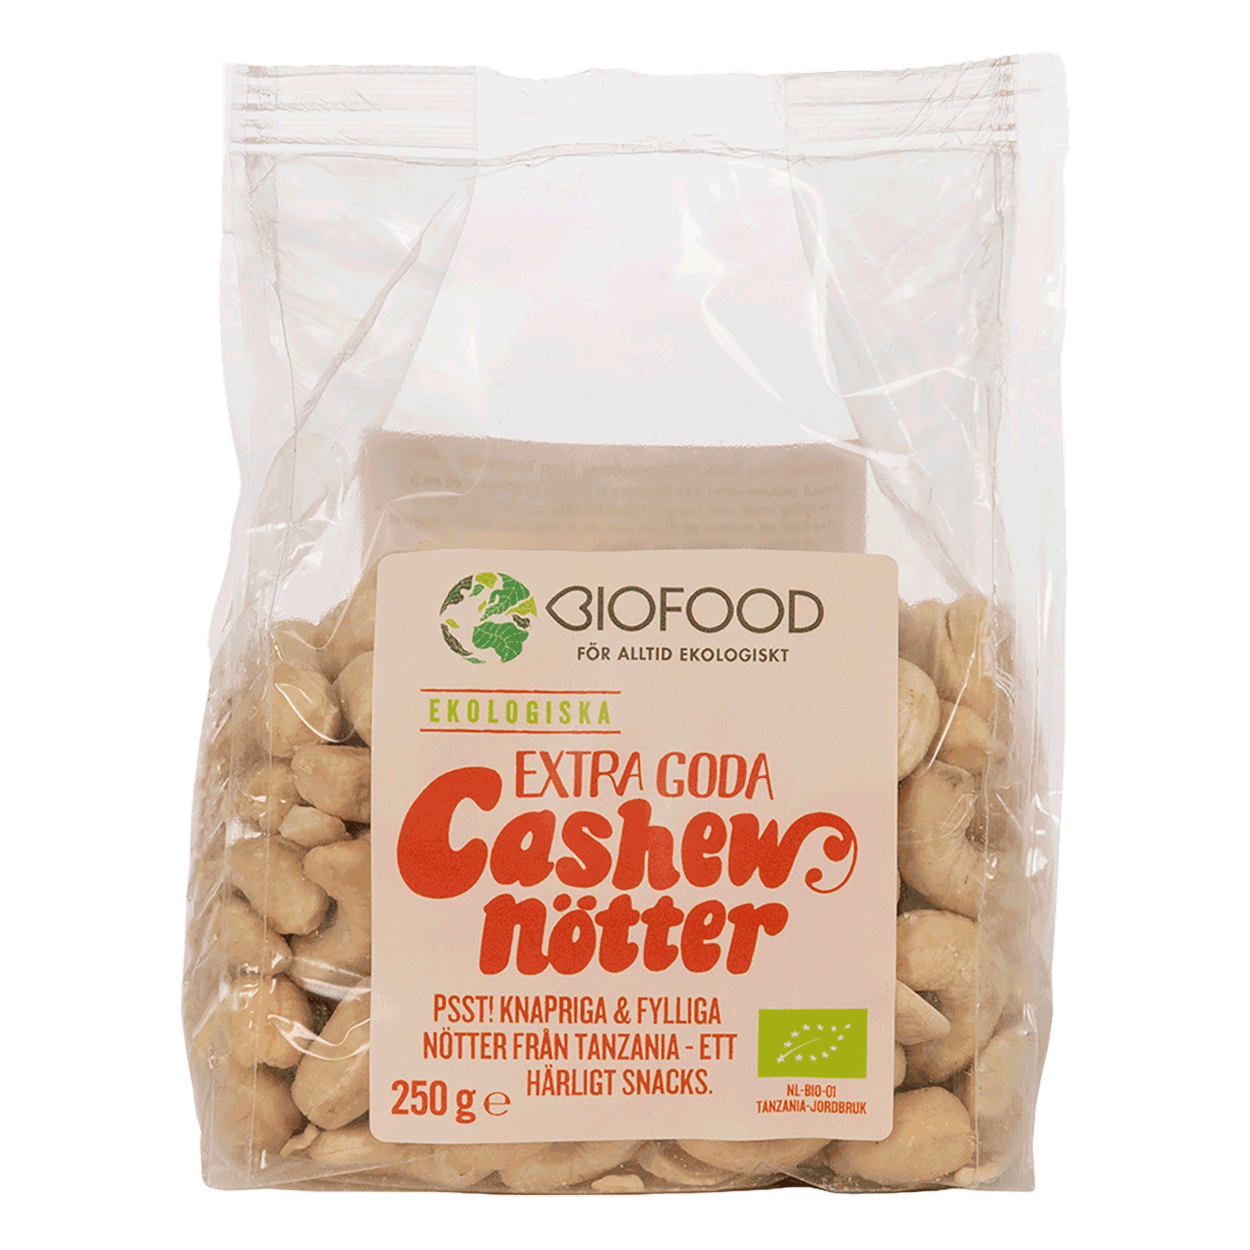 Biofood's Cashew Hela'